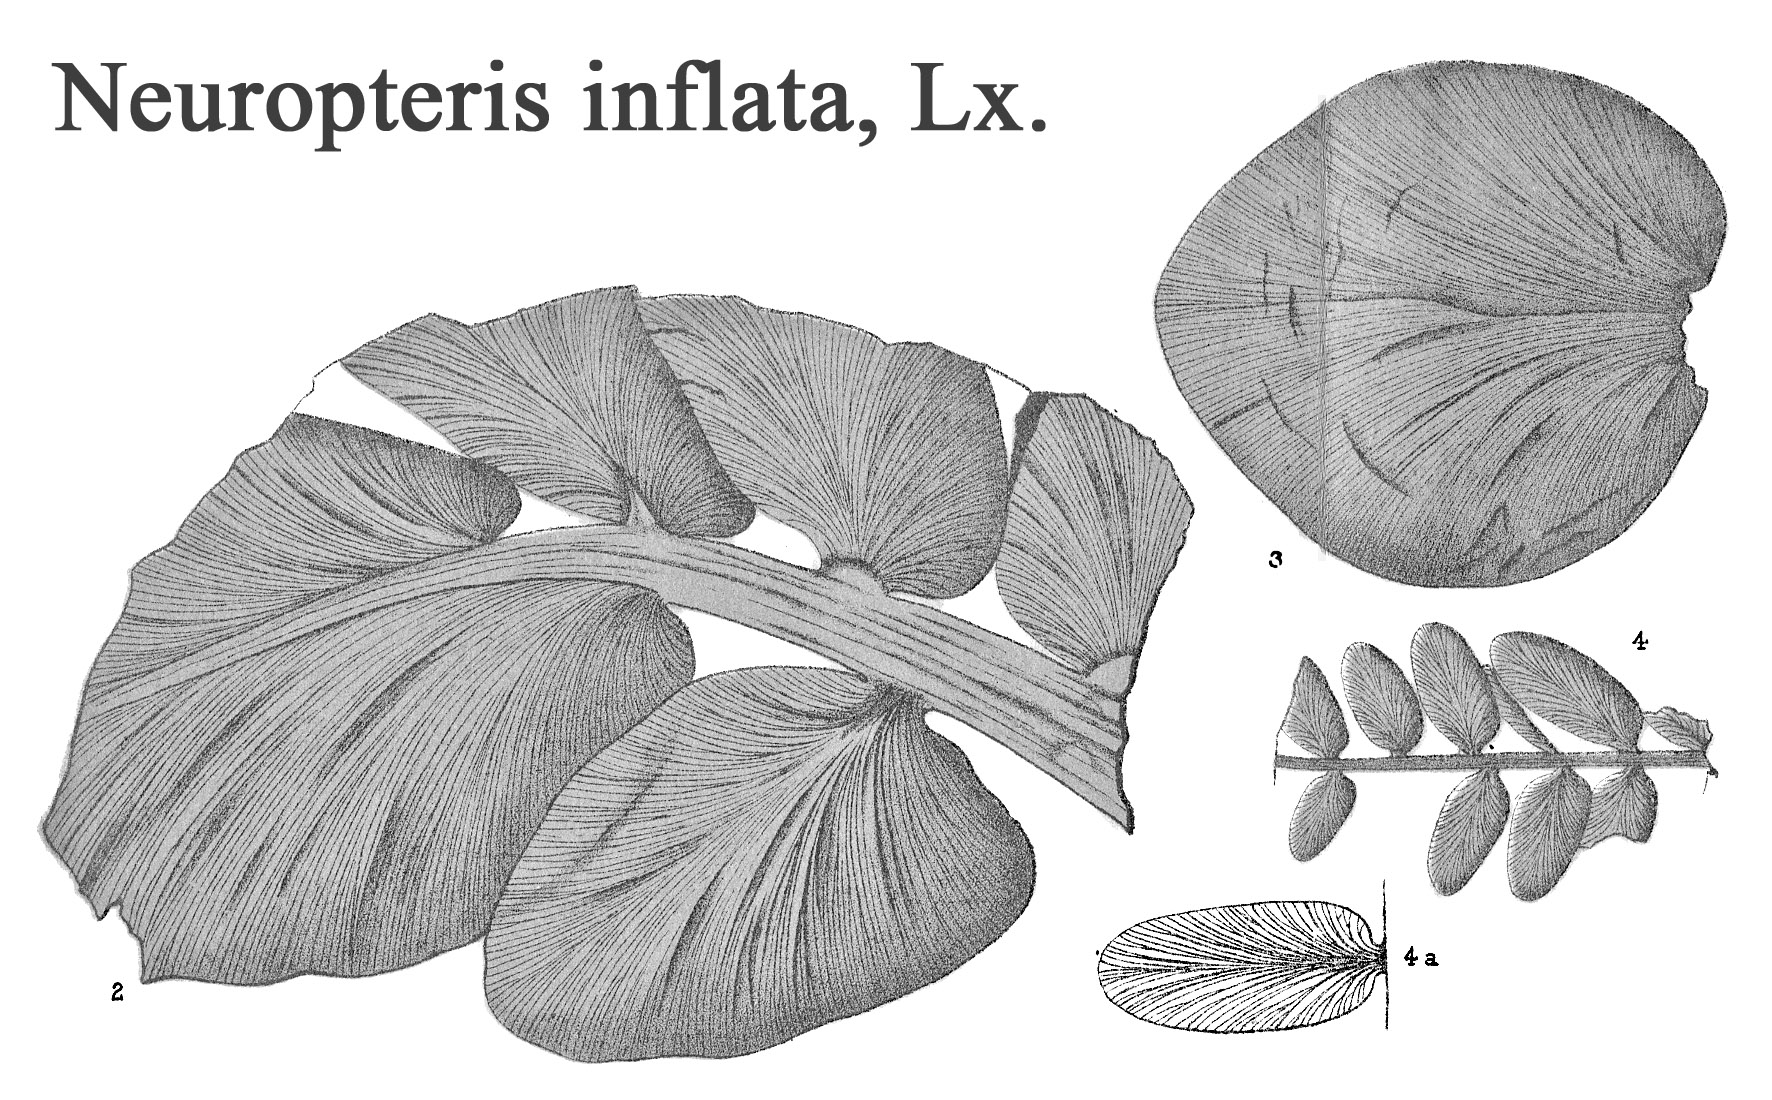 Neuropteris inflata, Plate VII